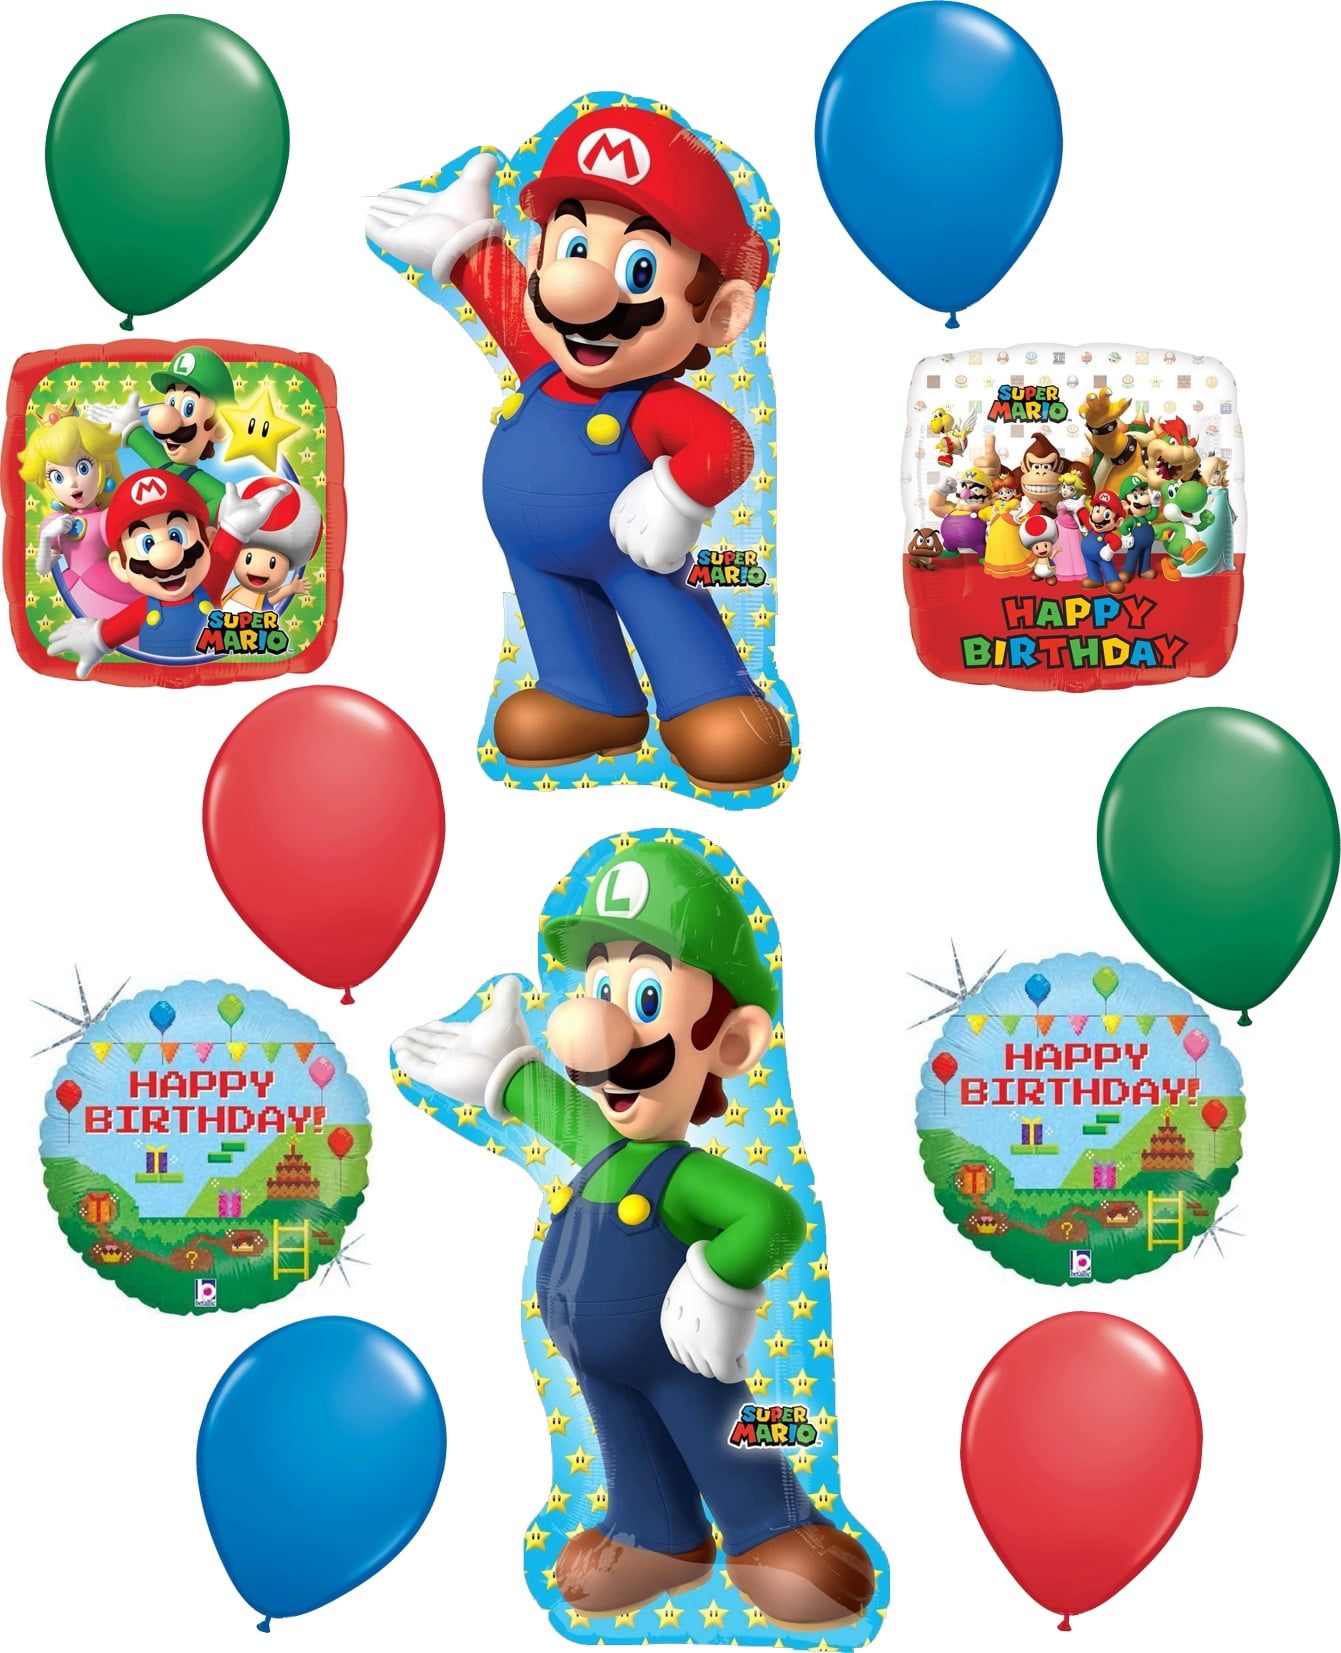 SUPER MARIO & LUIGI BROtheRS Video Game Birthday Balloons Decoration  Supplies Party 